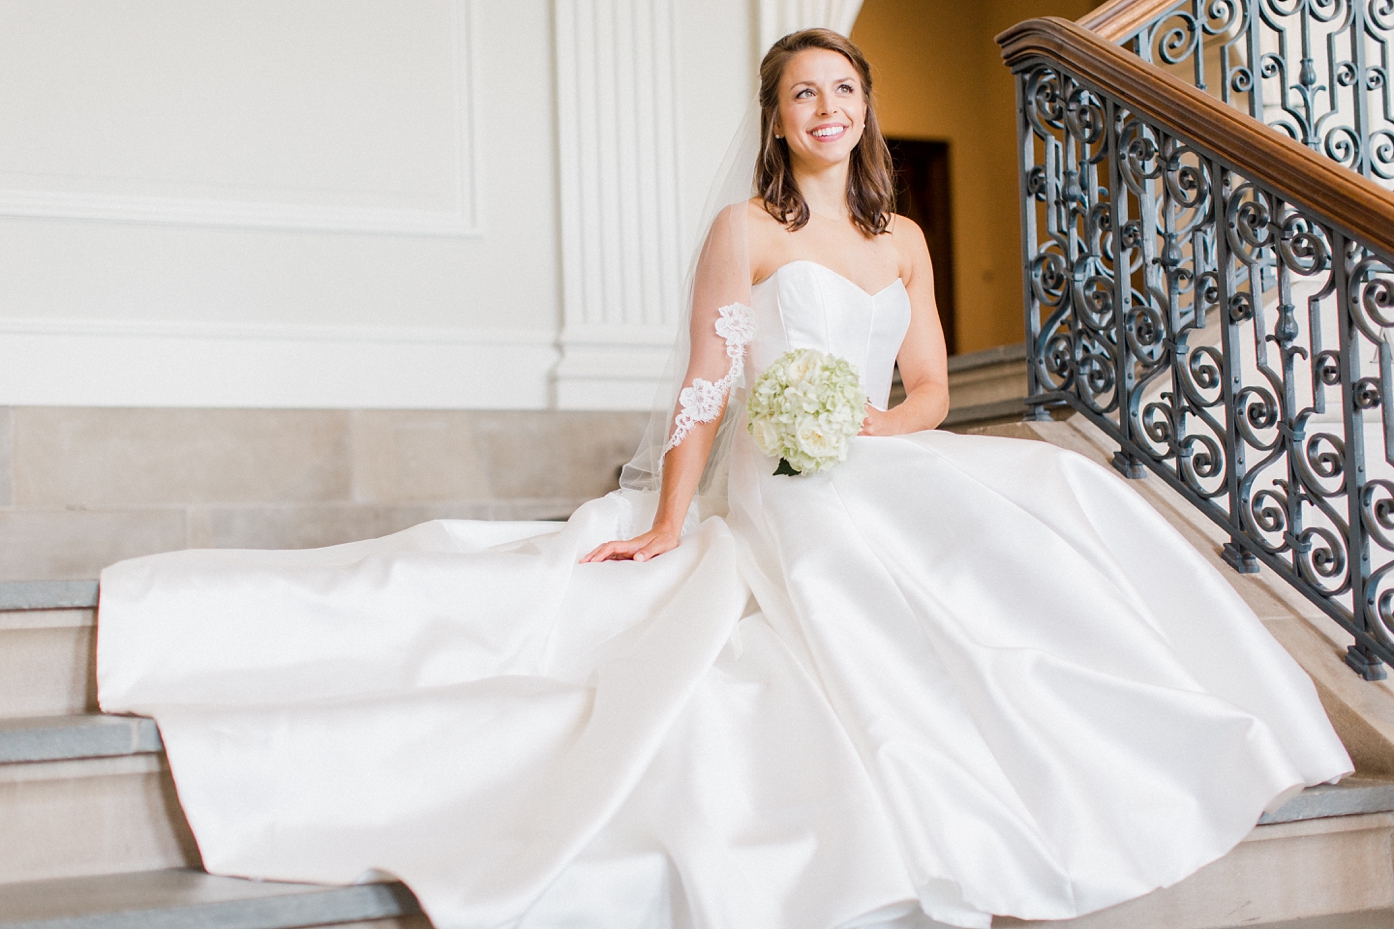 VMFA Bridal Portraits in Richmond, VA by Alisandra Photography